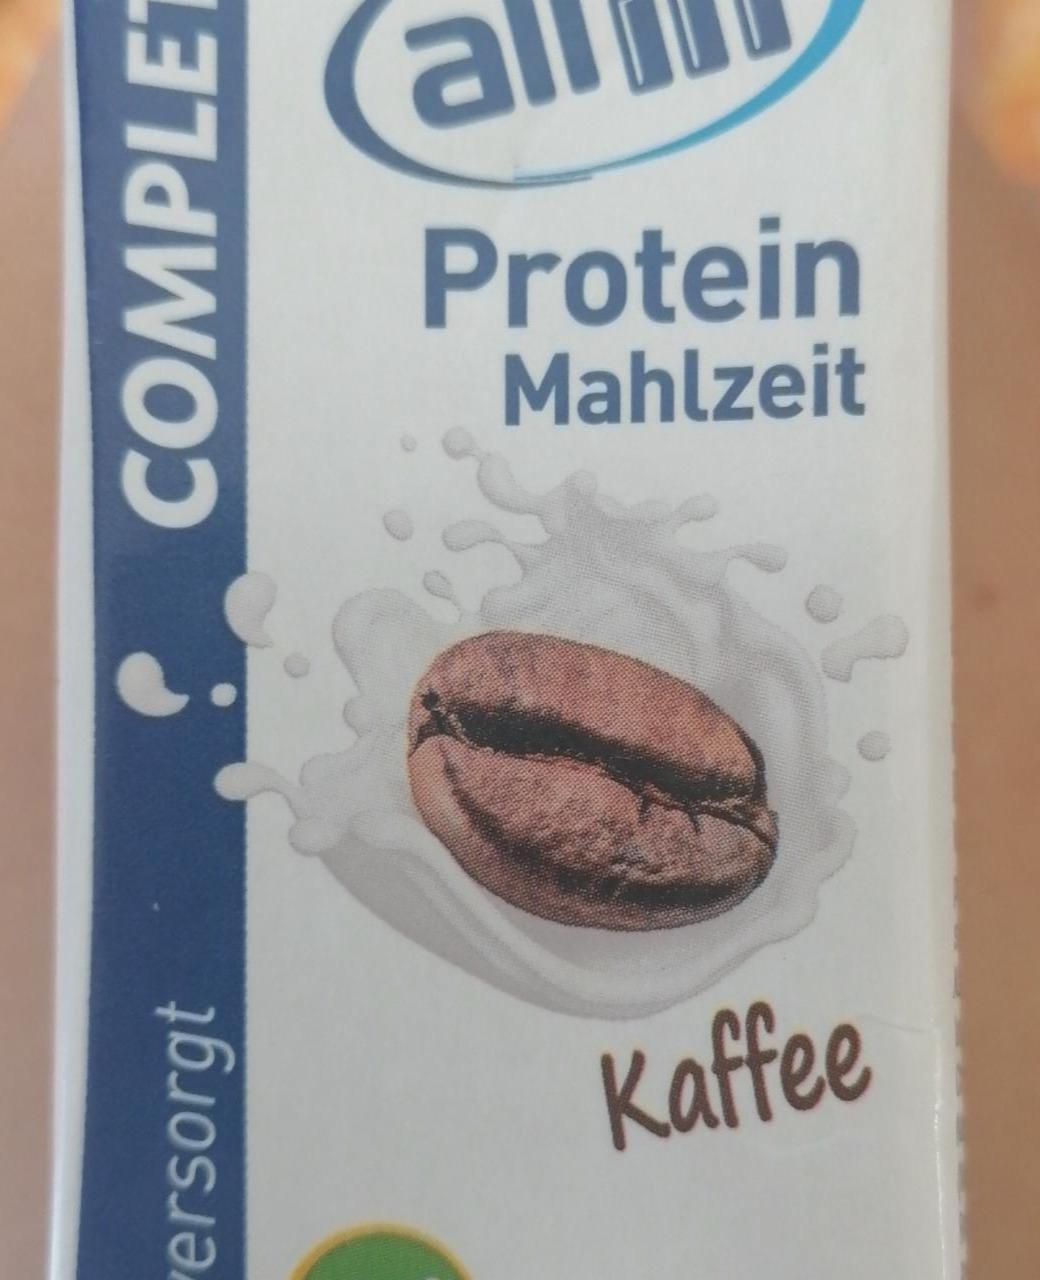 Fotografie - Complete Protein Mahlzeit Kaffee All in